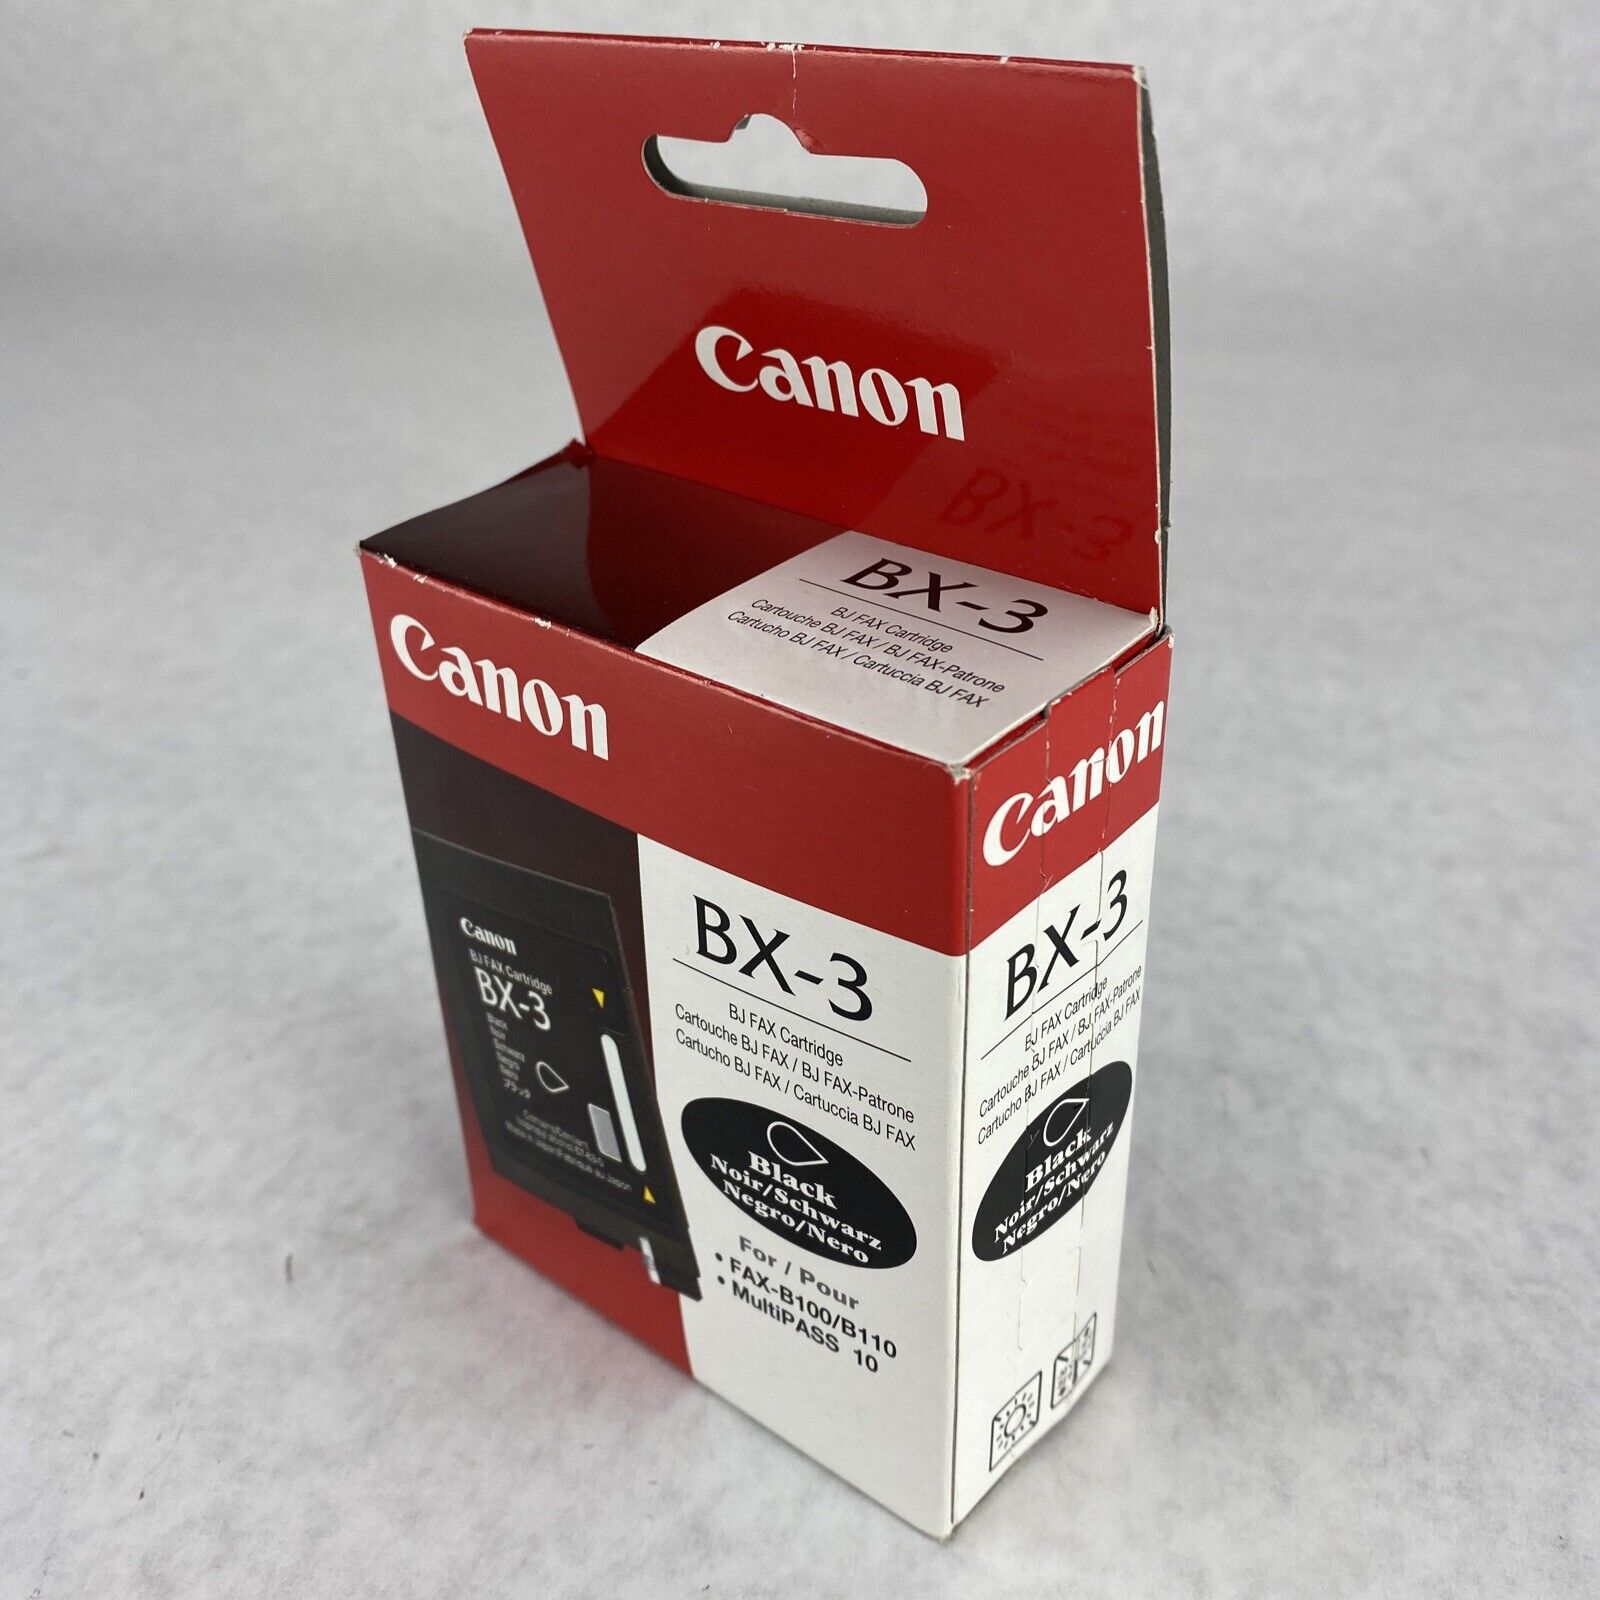 Canon BX-3 Genuine Black BJ Fax Inkjet Cartridge FAX-B100 B110 B820 B150 B155